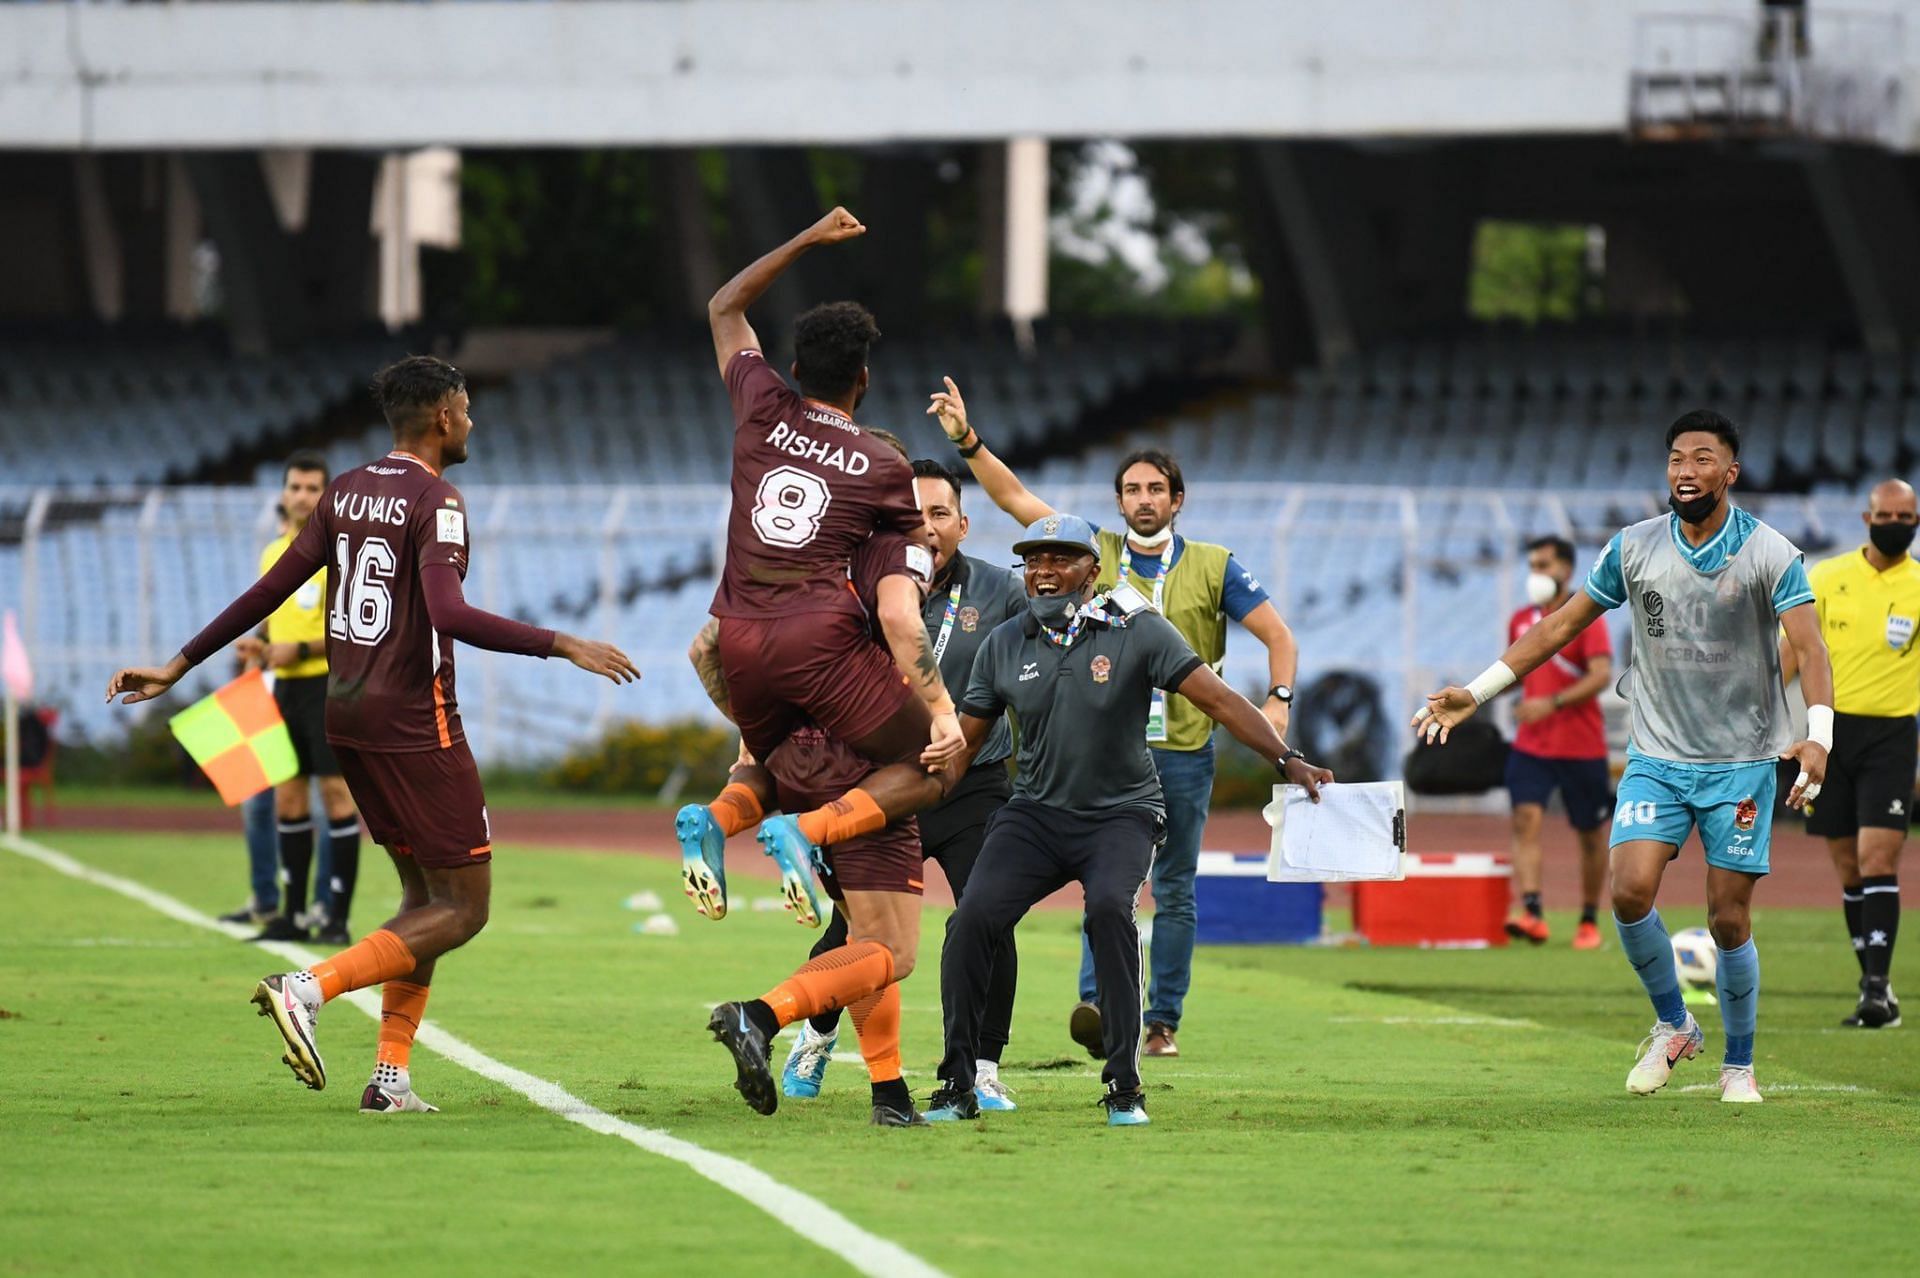 Gokulam Kerala FC players and staff celebrating after scoring against ATK Mohun Bagan. (Image Courtesy: Twitter/GokulamKeralaFC)